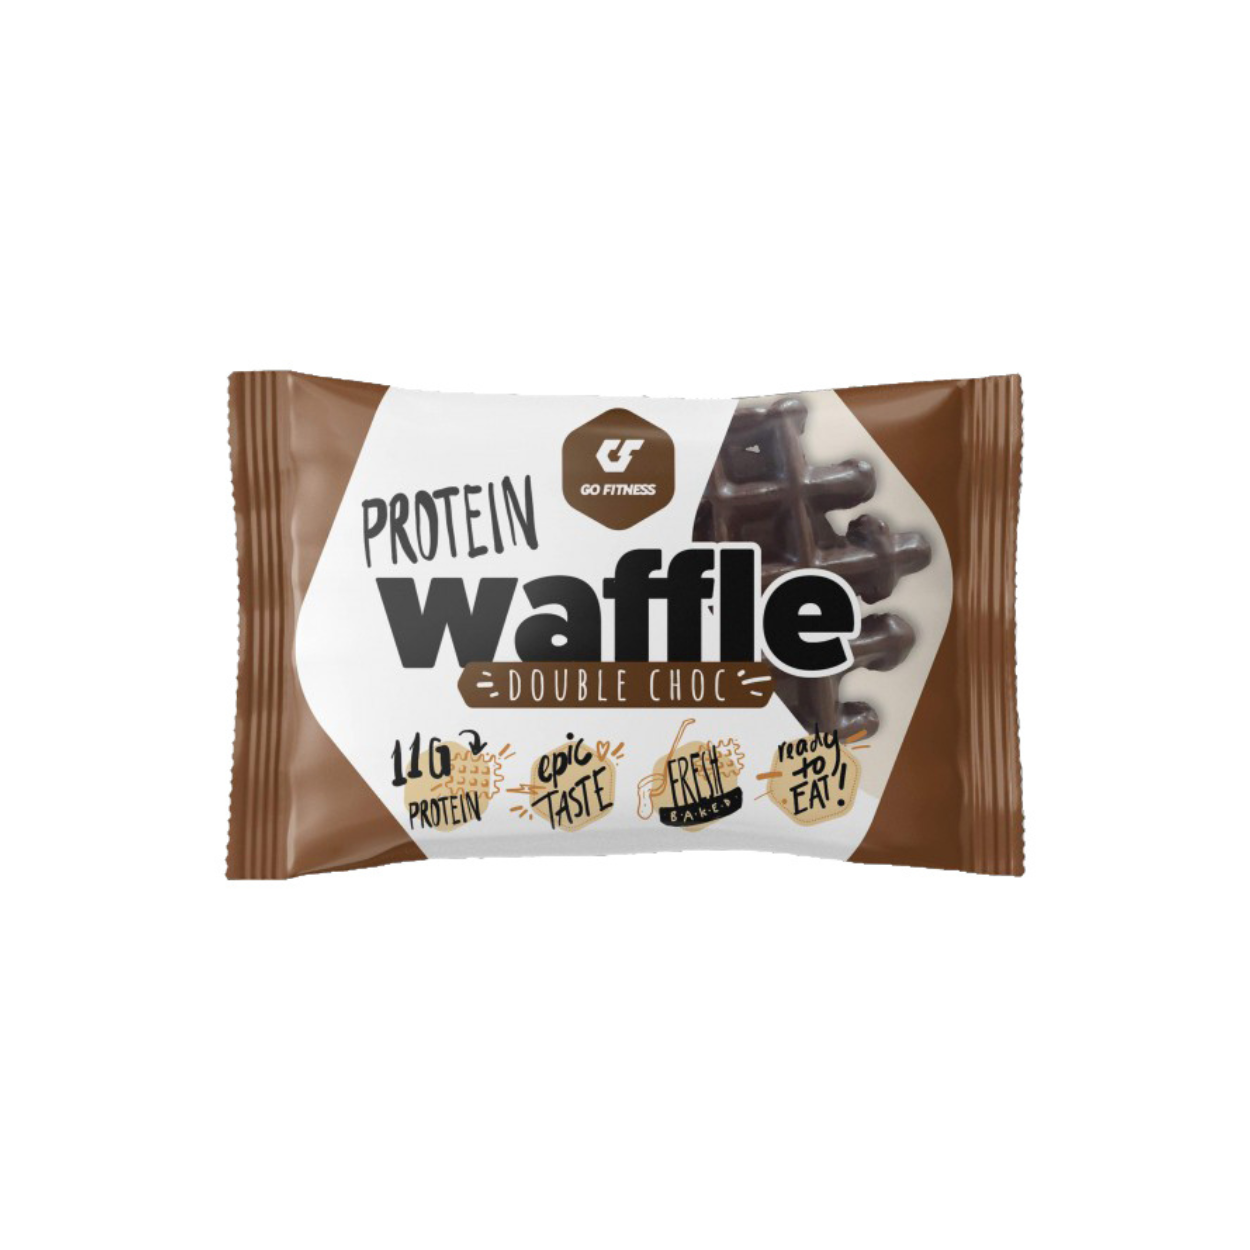 Go Fitness Protein Waffle Double Chocolat (1-12x50g)